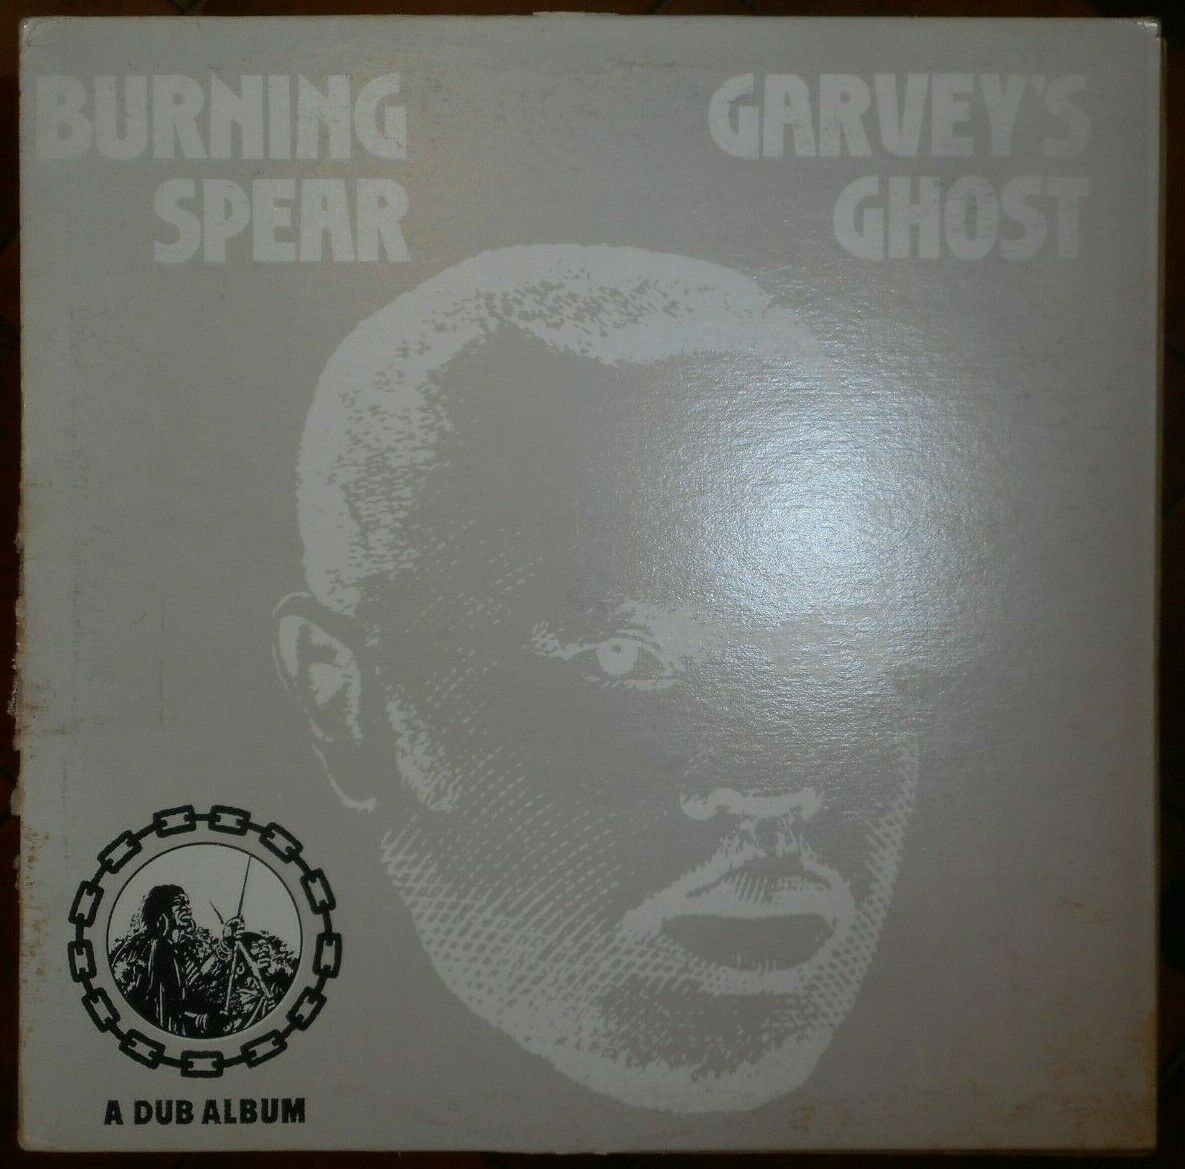 1976 Jamaica Release - Burning Spear - GARVEY'S GHOST Roots Reggae - WOLF DUB LP